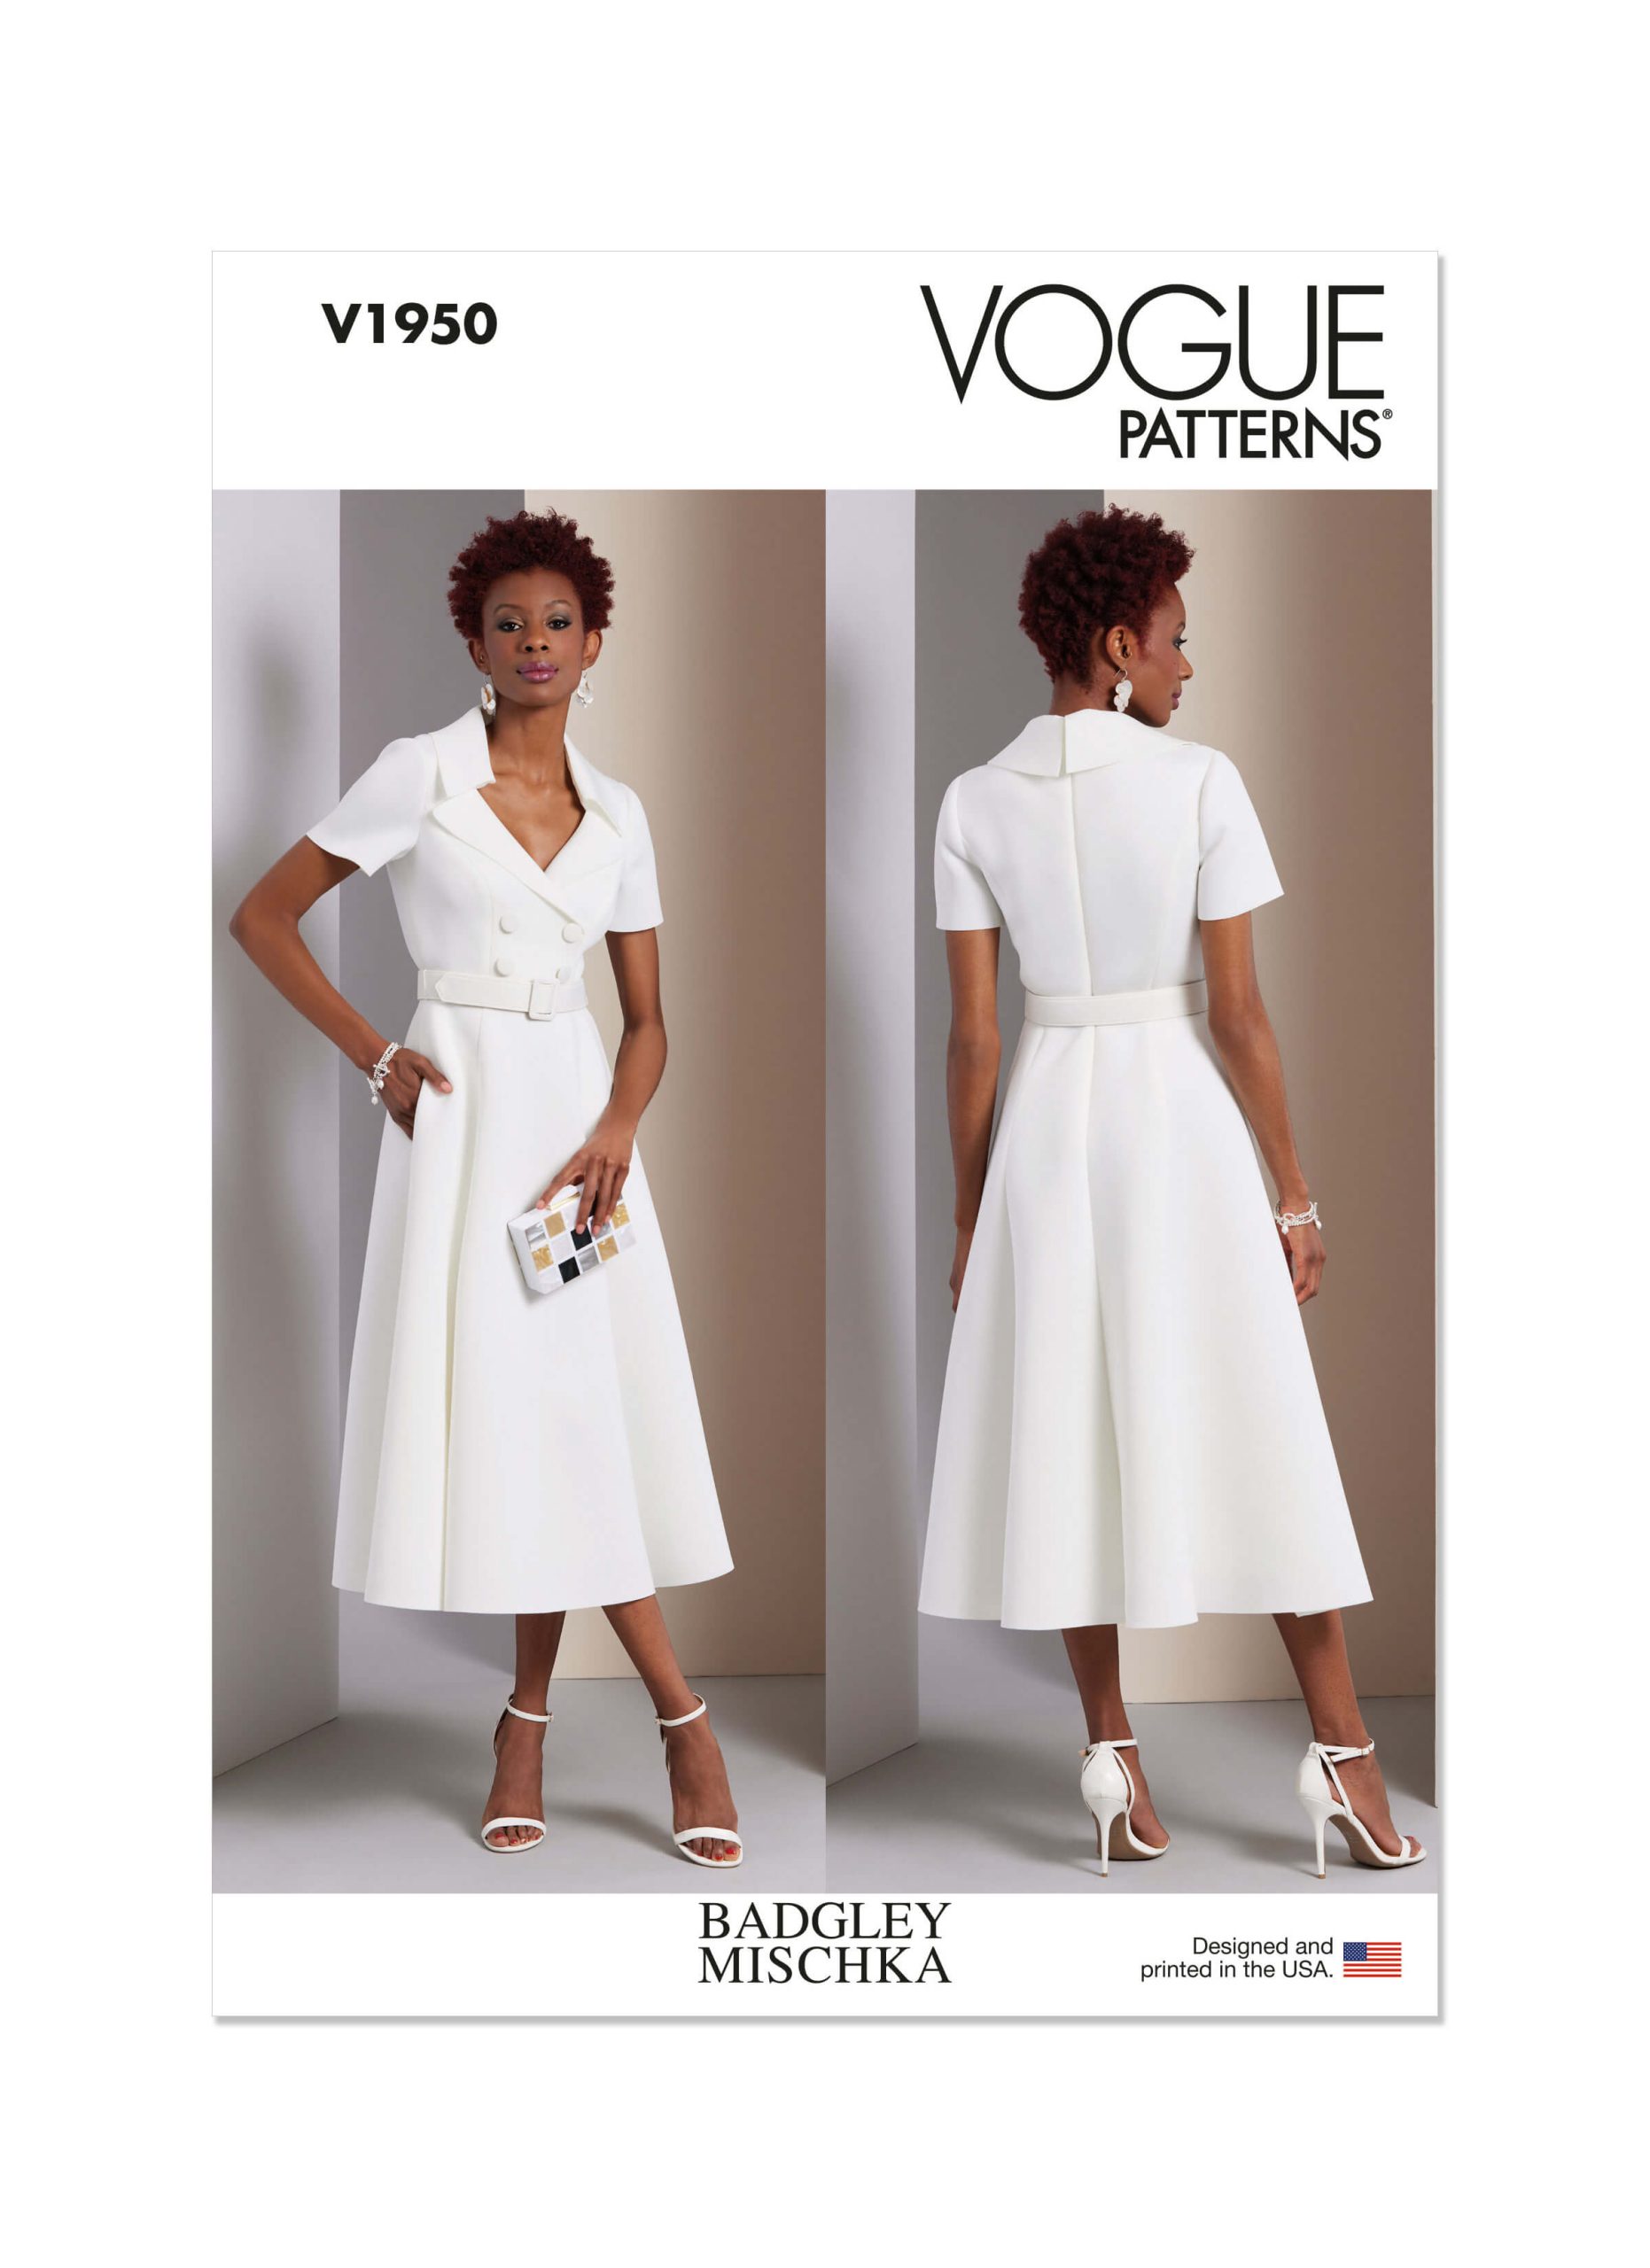 Vogue Patterns V1950 Misses' Dress by Badgley Mischka